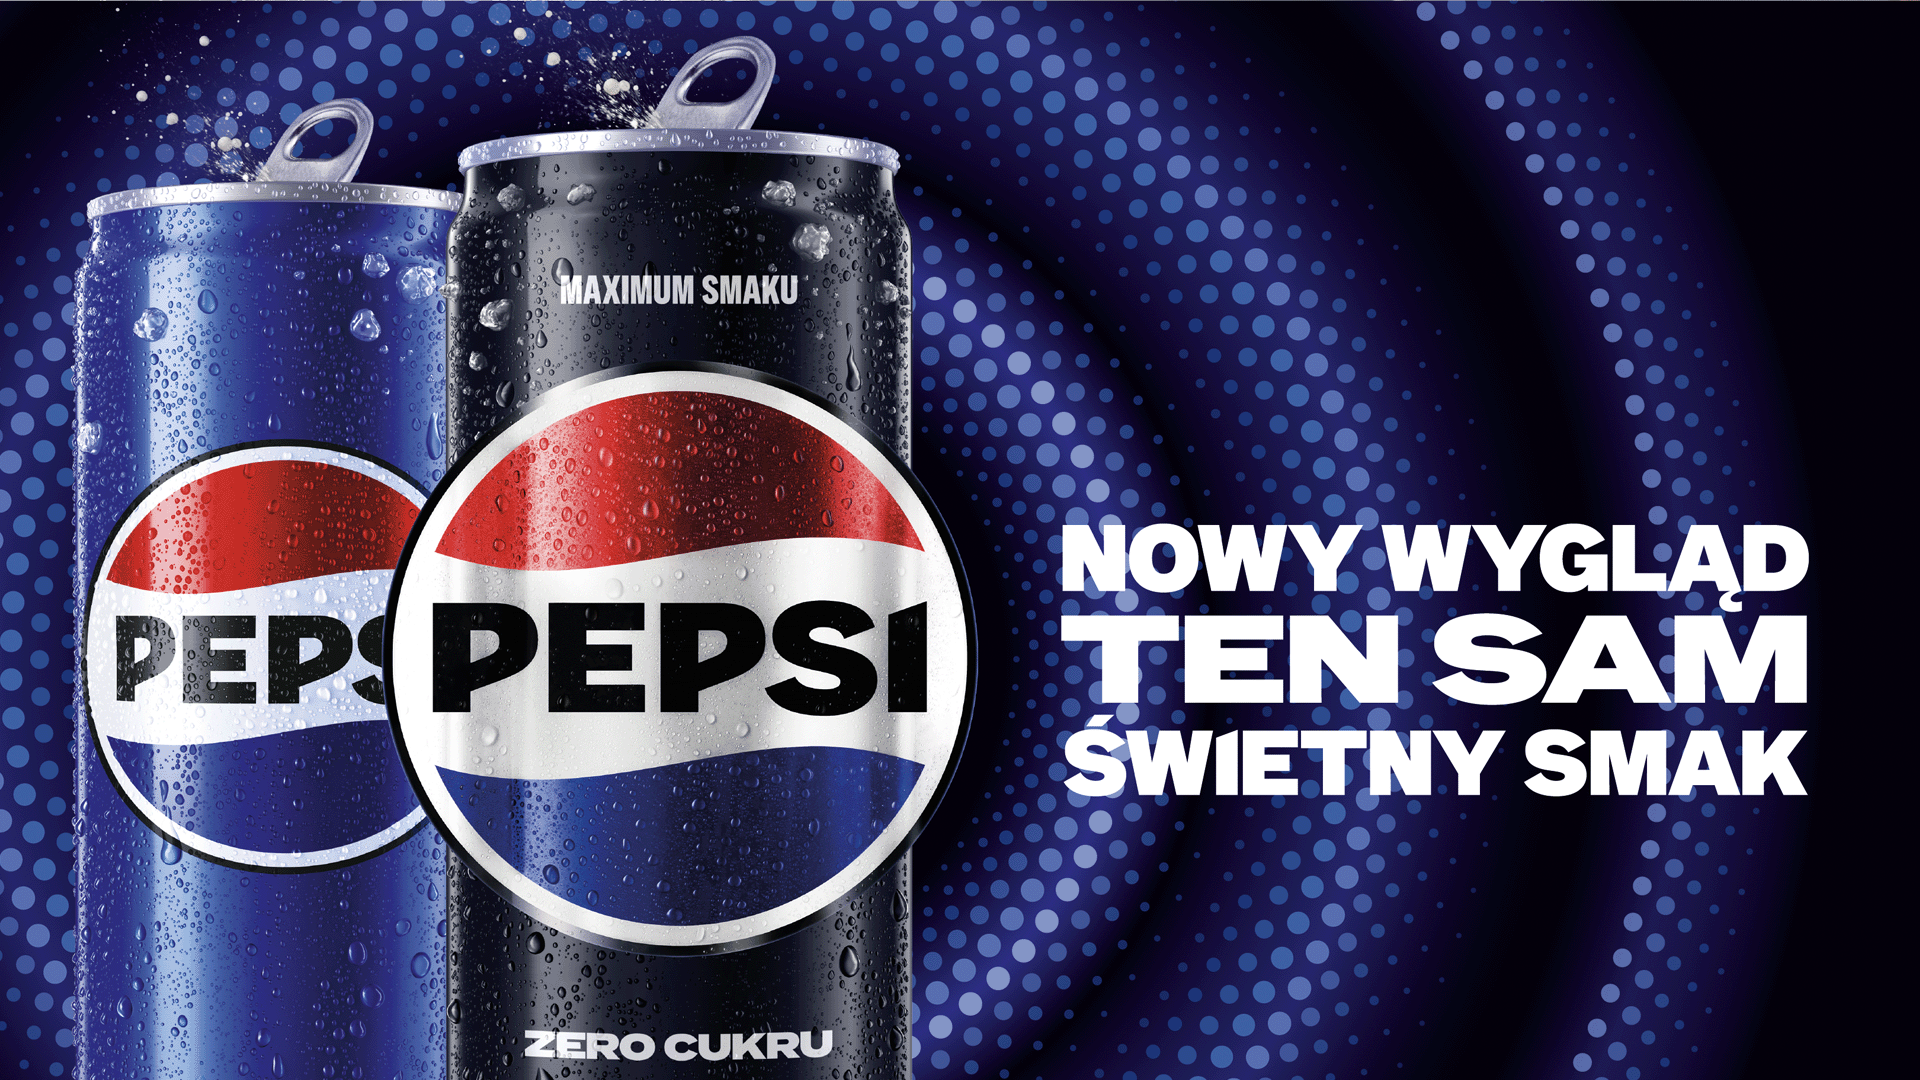 Pepsi zaprezentowało nową kampanię cola MEDIARUN.COM PEPSI COLA KAMPANIA REKLAMOWA V1